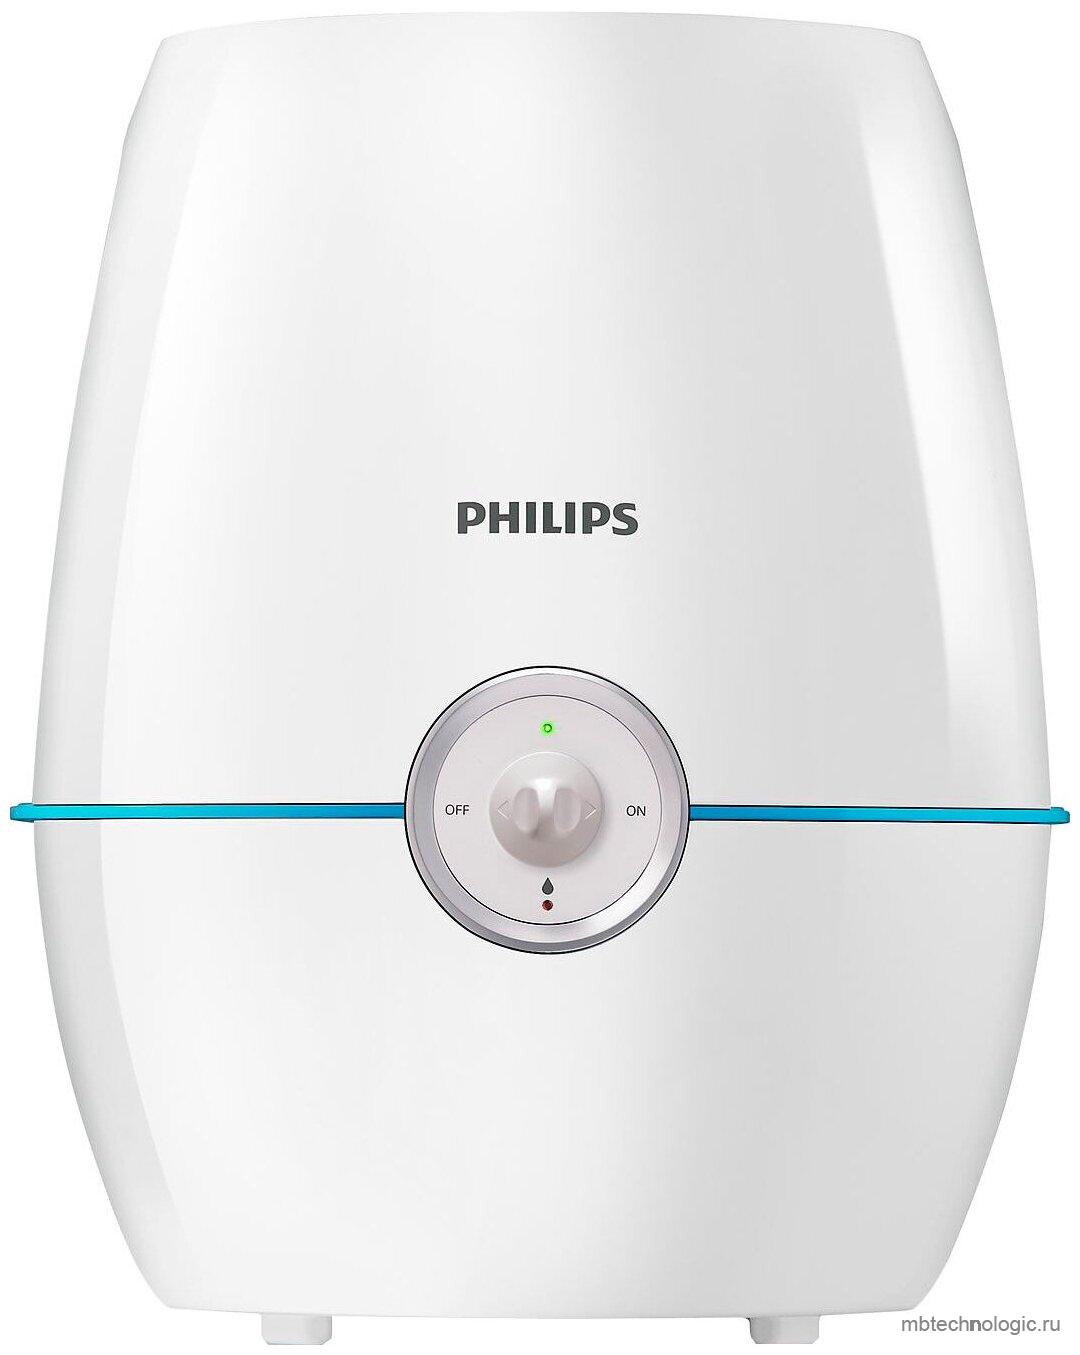 Philips HU4901